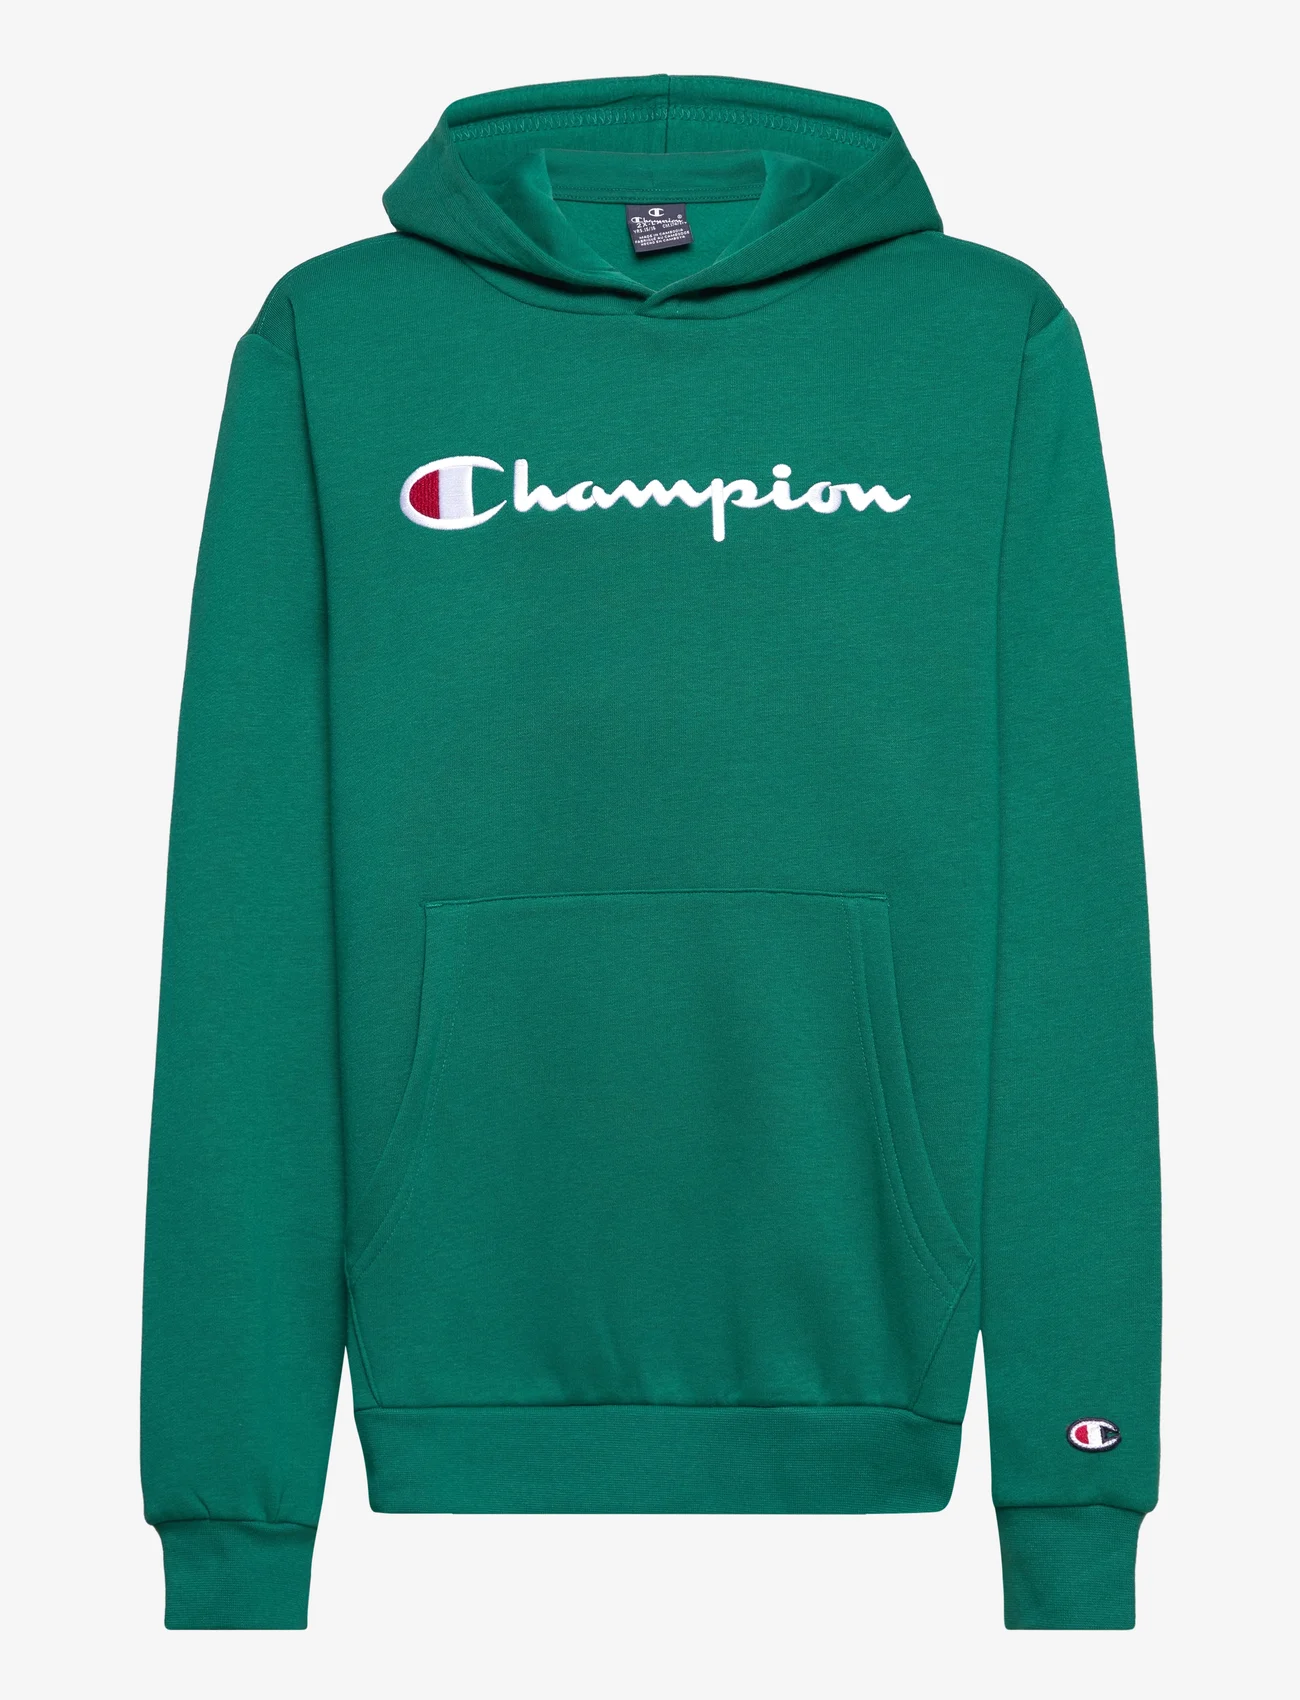 Champion - Hooded Sweatshirt - hoodies - aventurine - 0